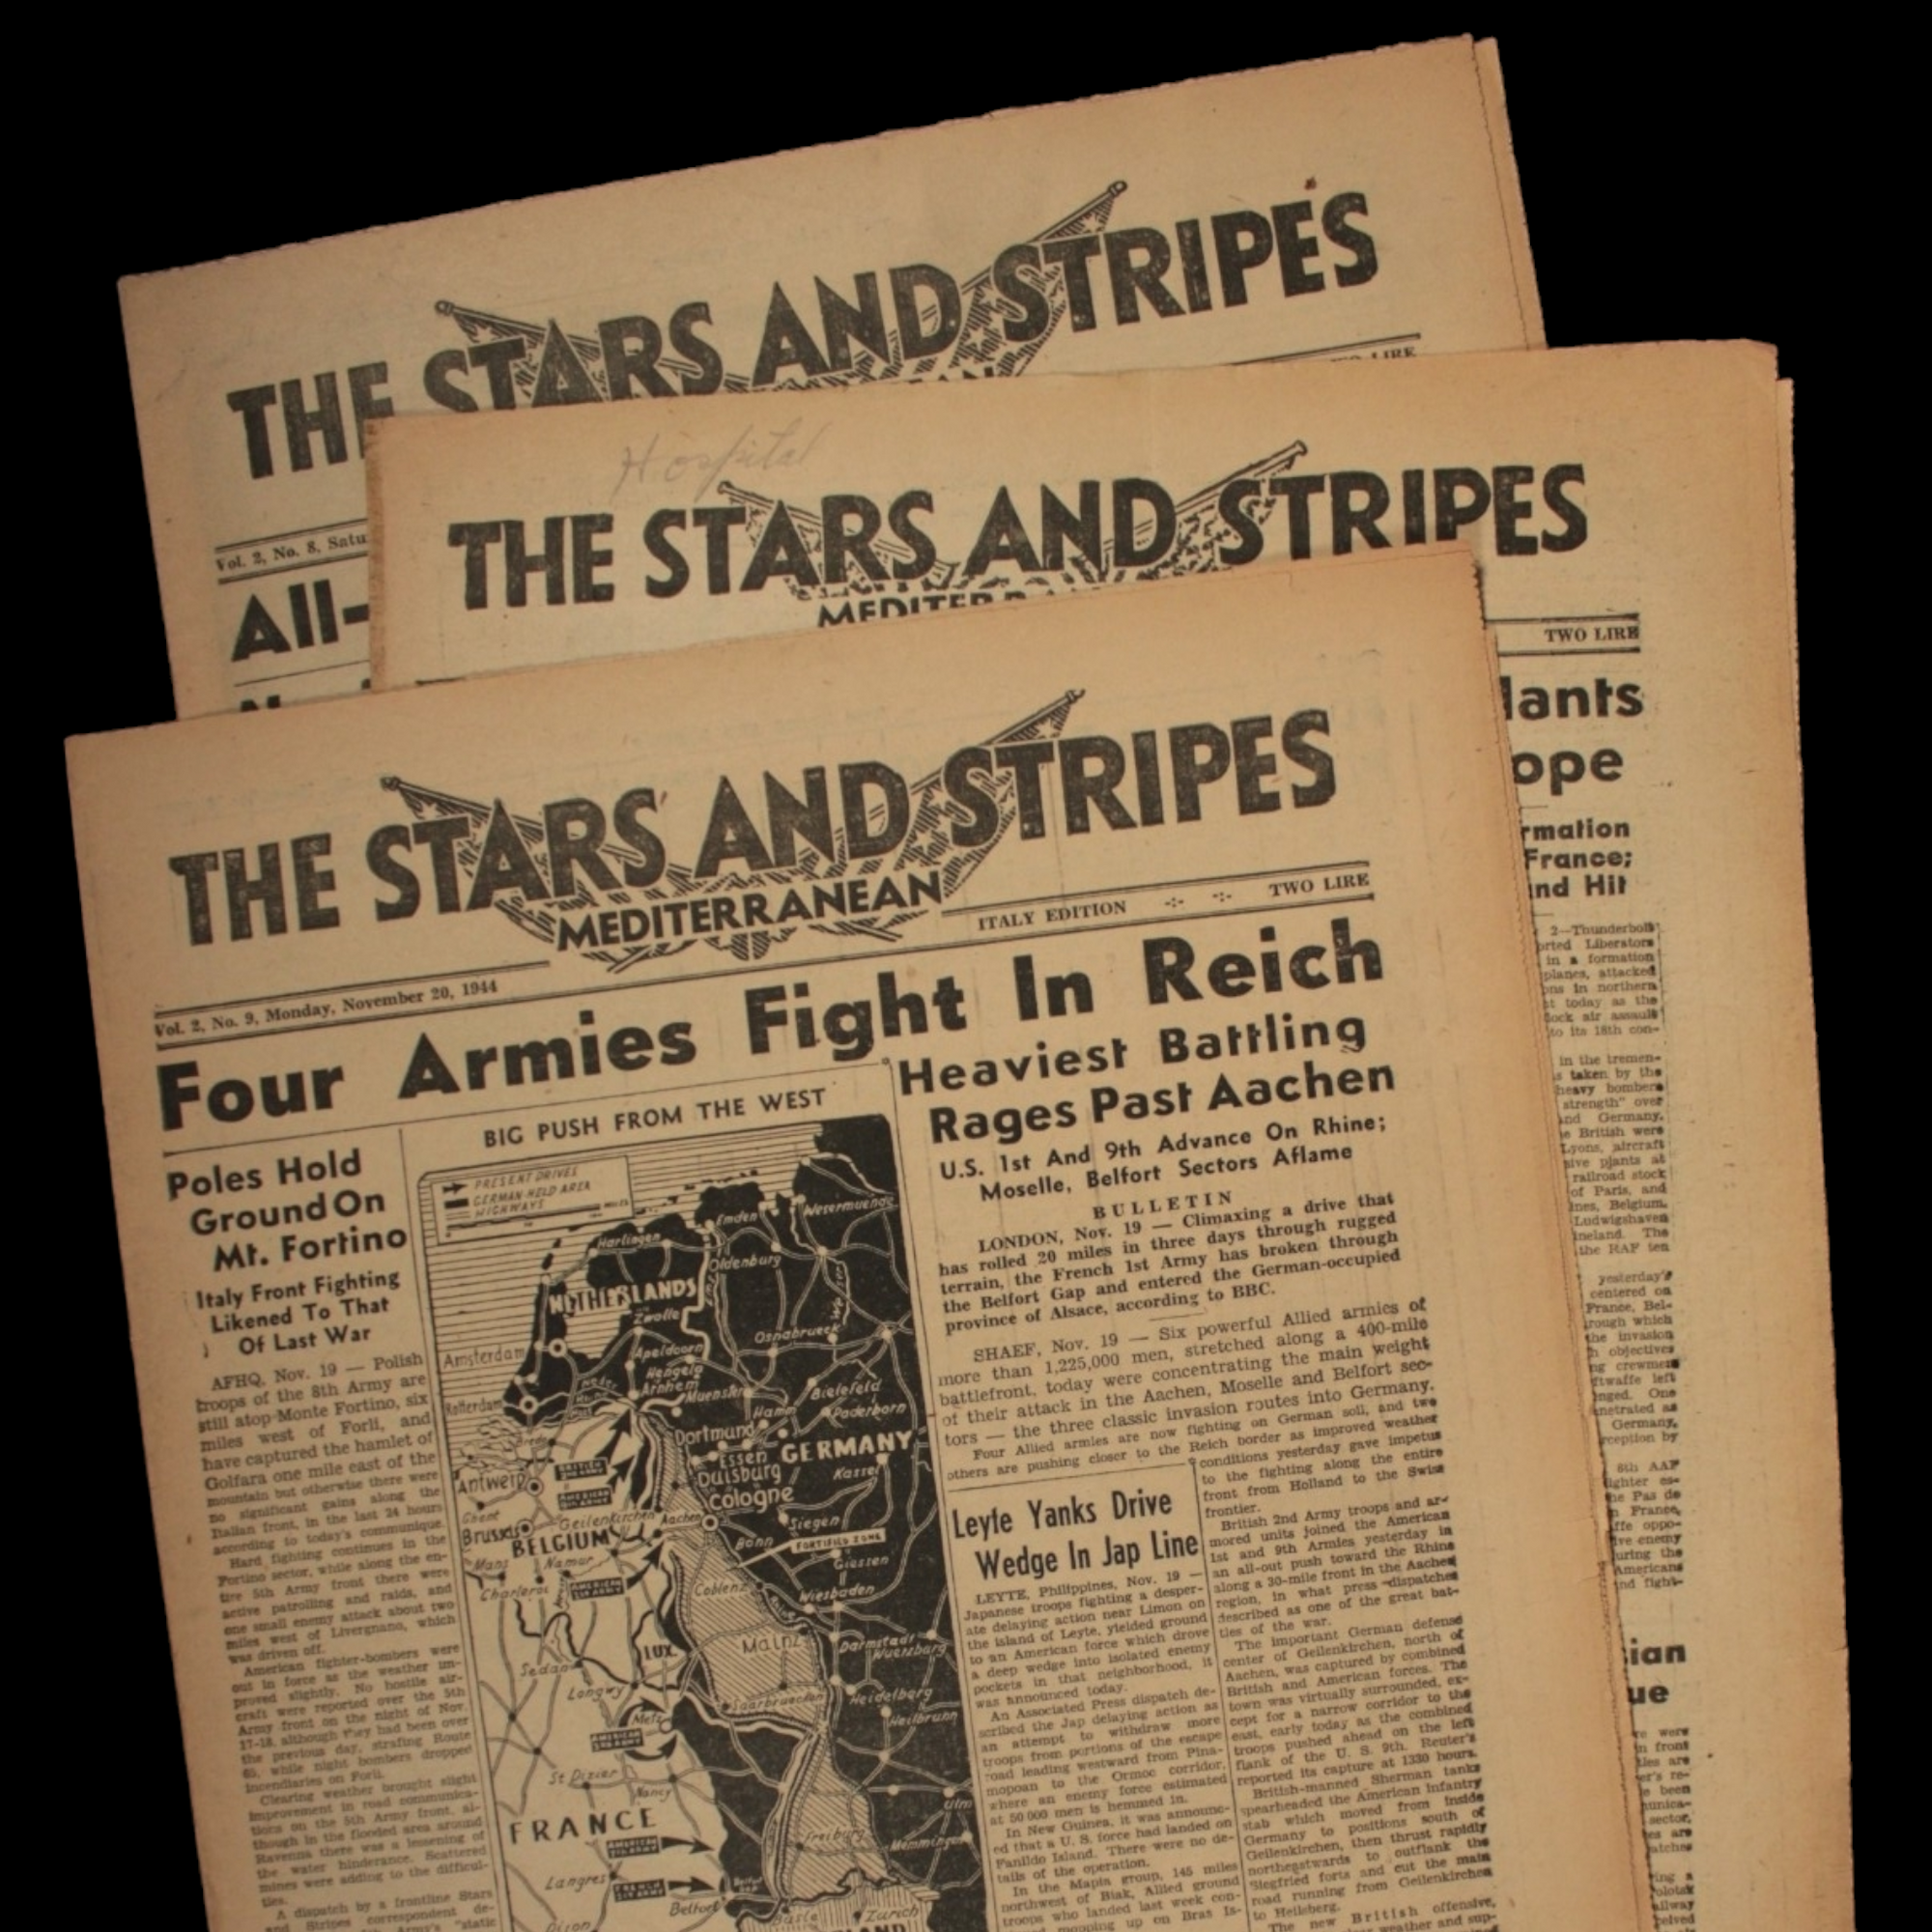 Stars and Stripes Newspaper, European Edition - 1942 to 1945 - World War II